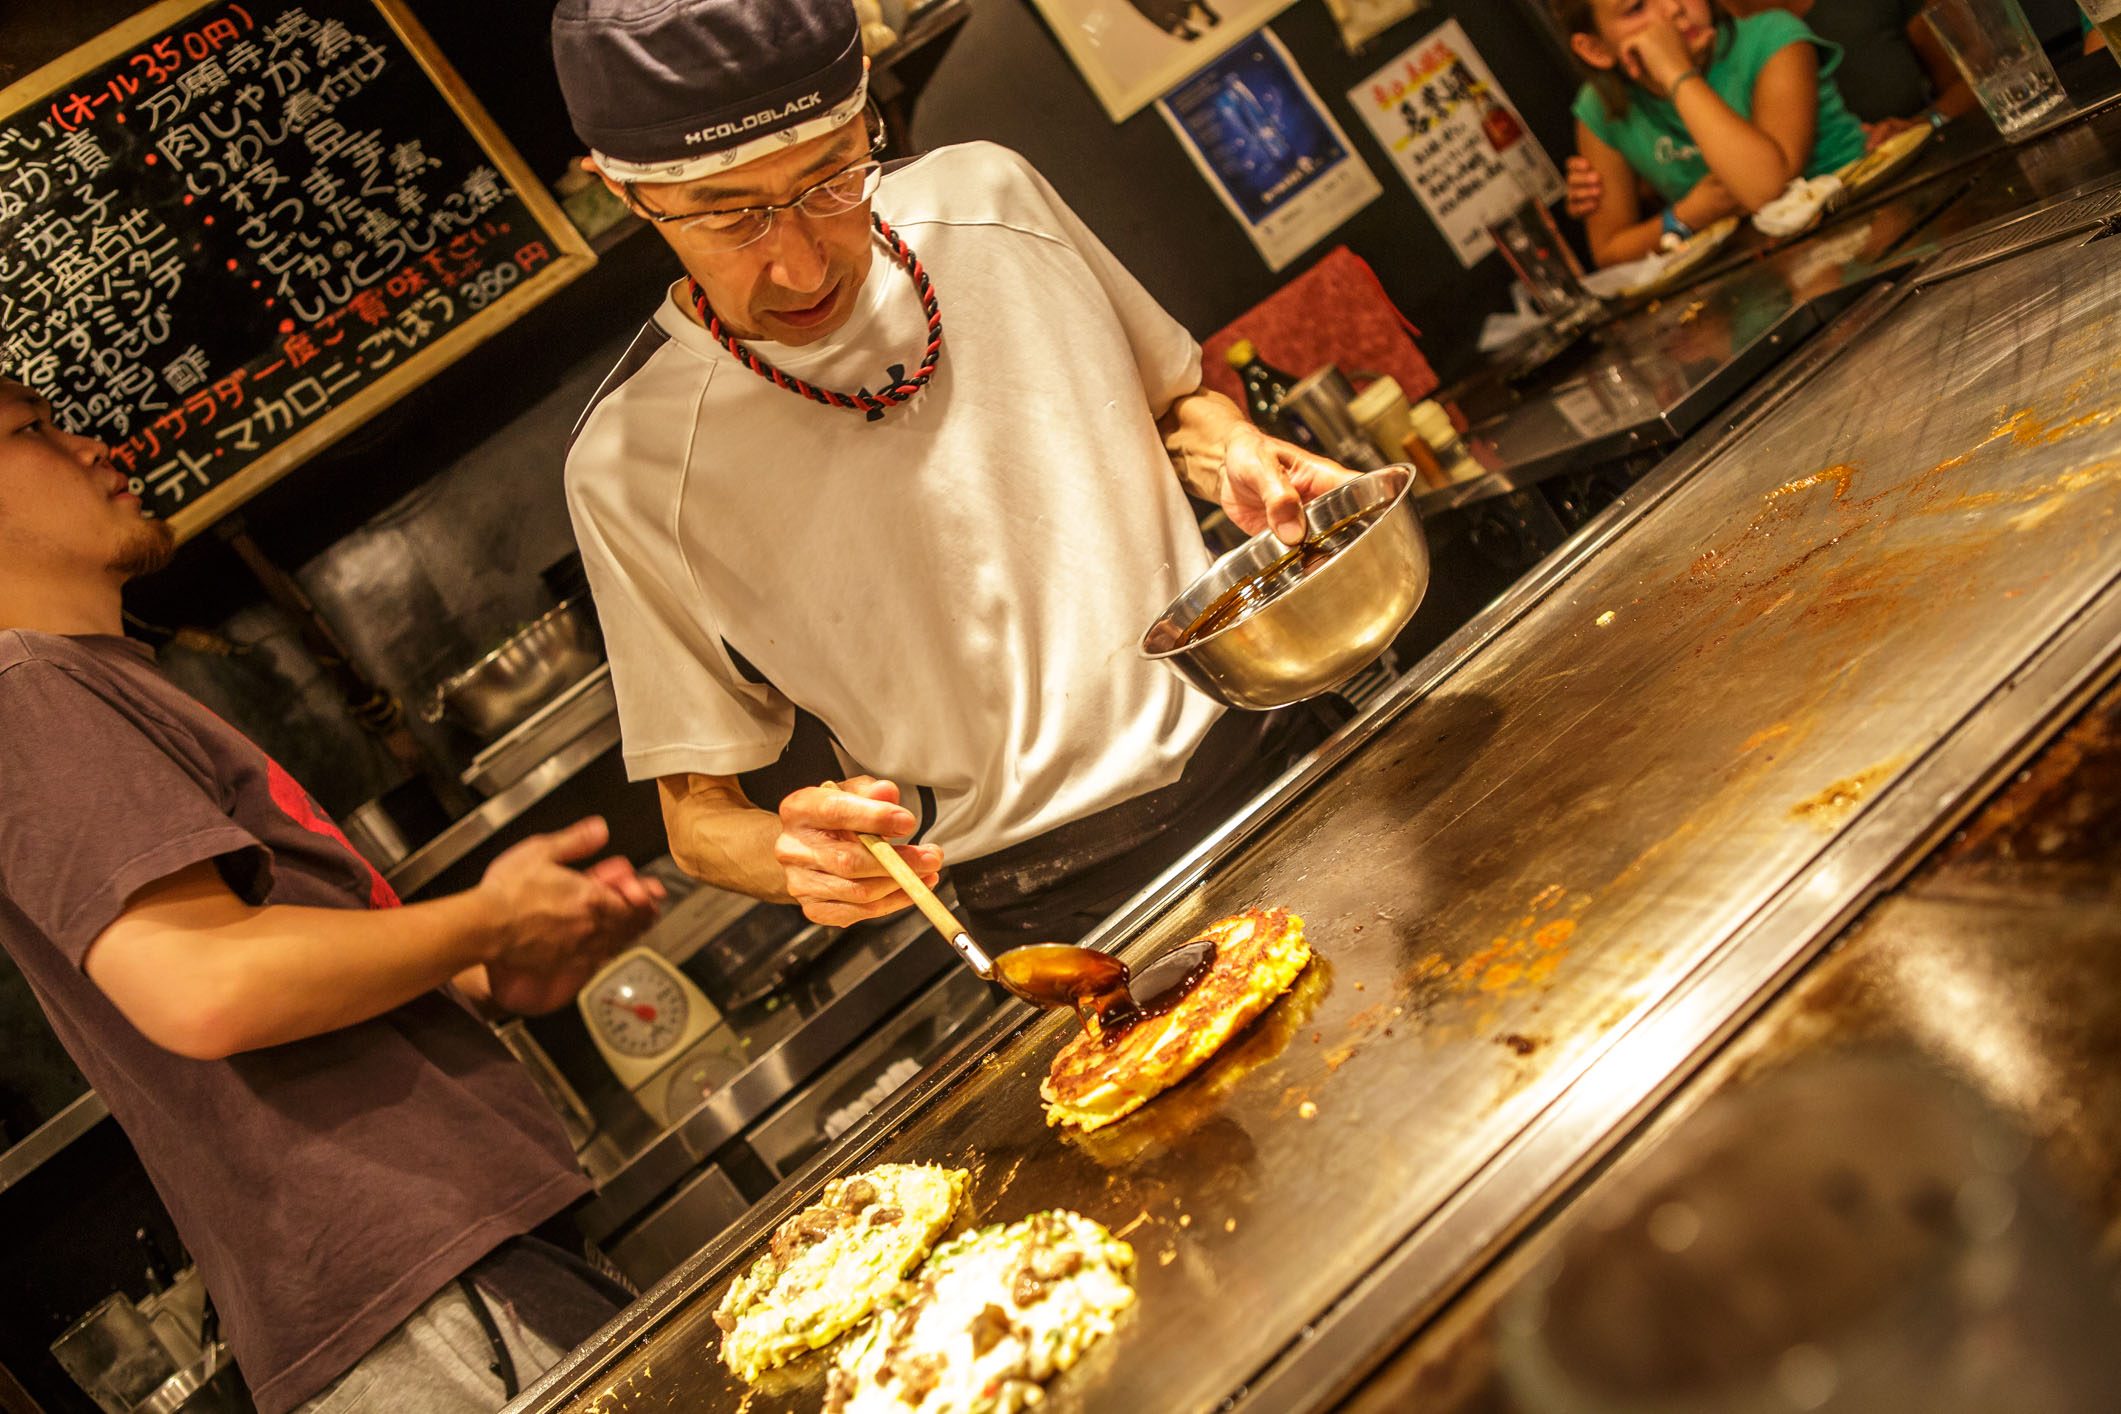 /Guewen/galeries/public/Voyages/Japon/kyoto/okonomiyaki/Okonomiyaki_032.jpg